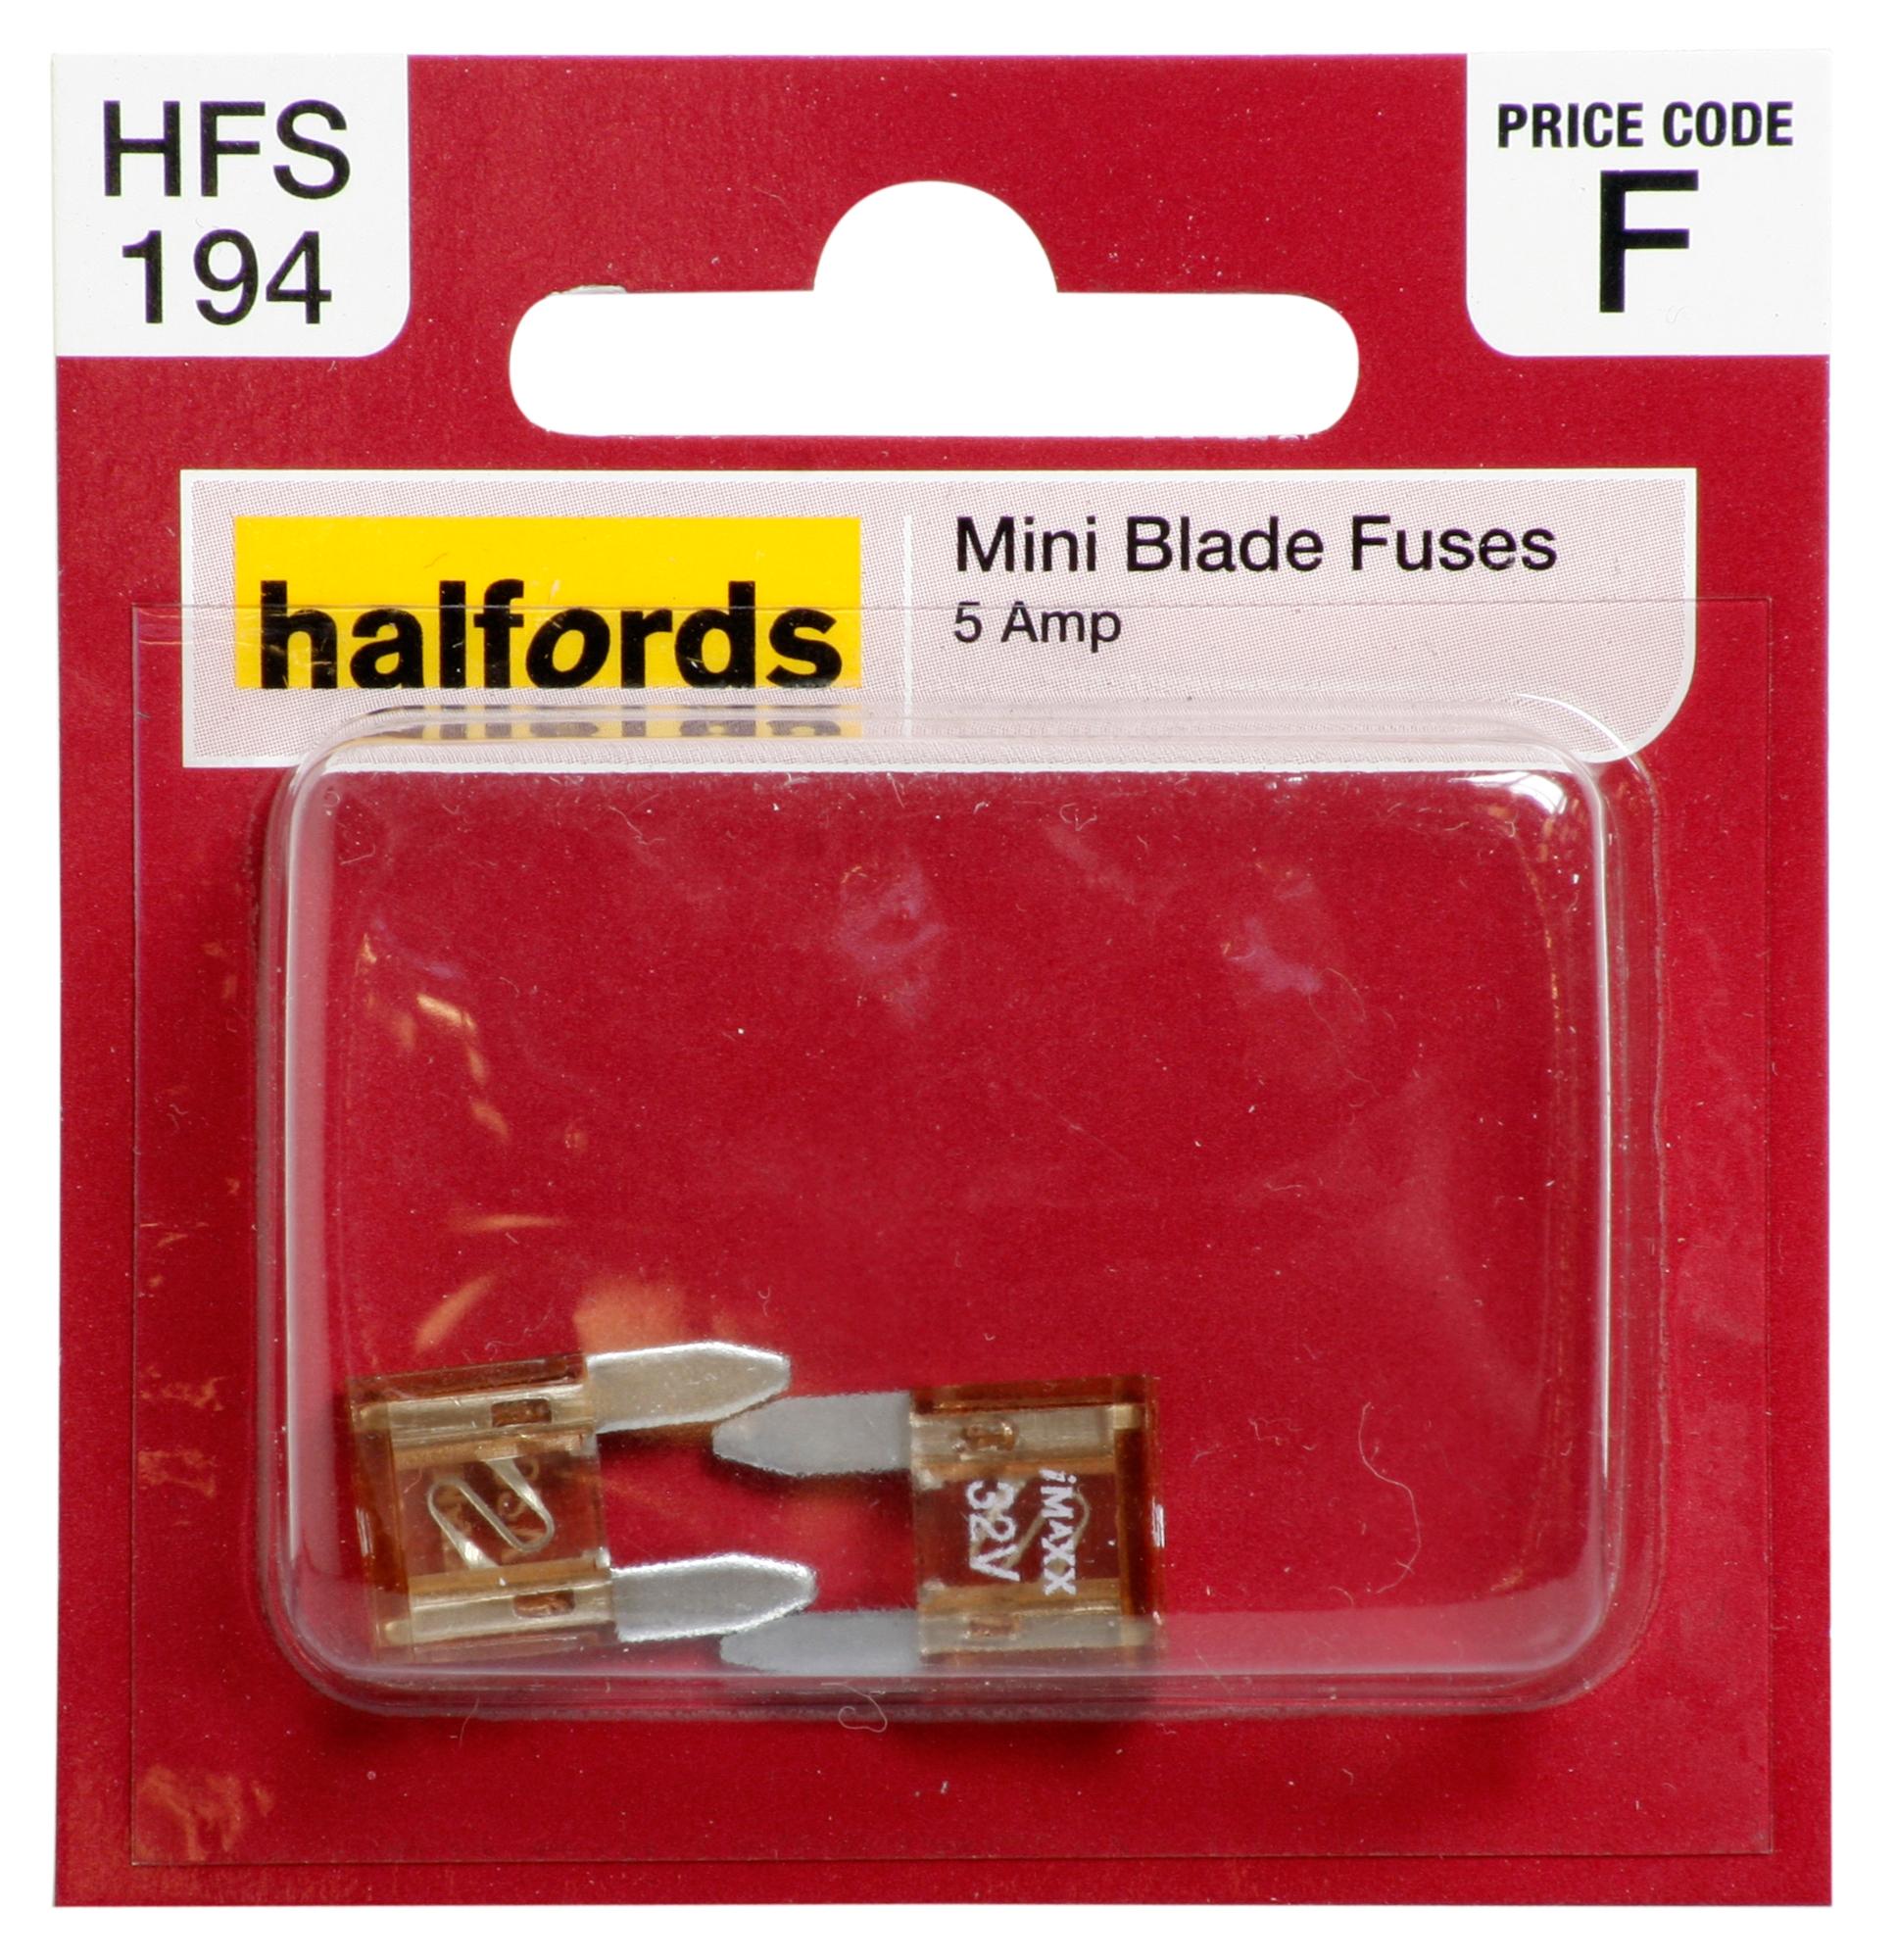 Halfords Mini Blade Fuses 5 Amp (Hfs194)